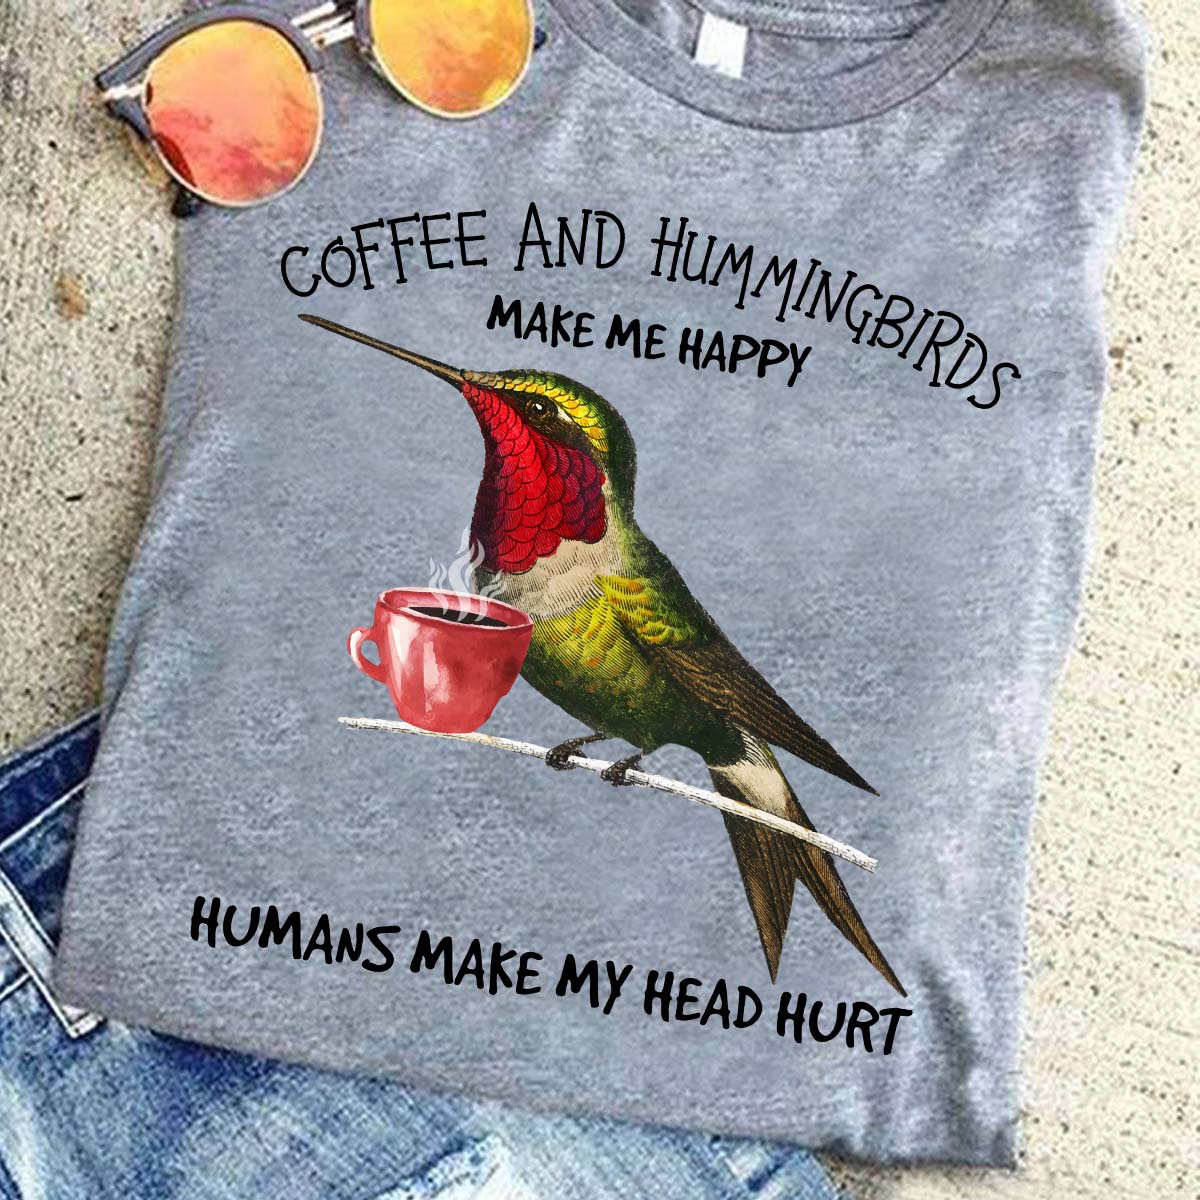 Coffee and Hummingbirds make me happy but humans make my head hurt